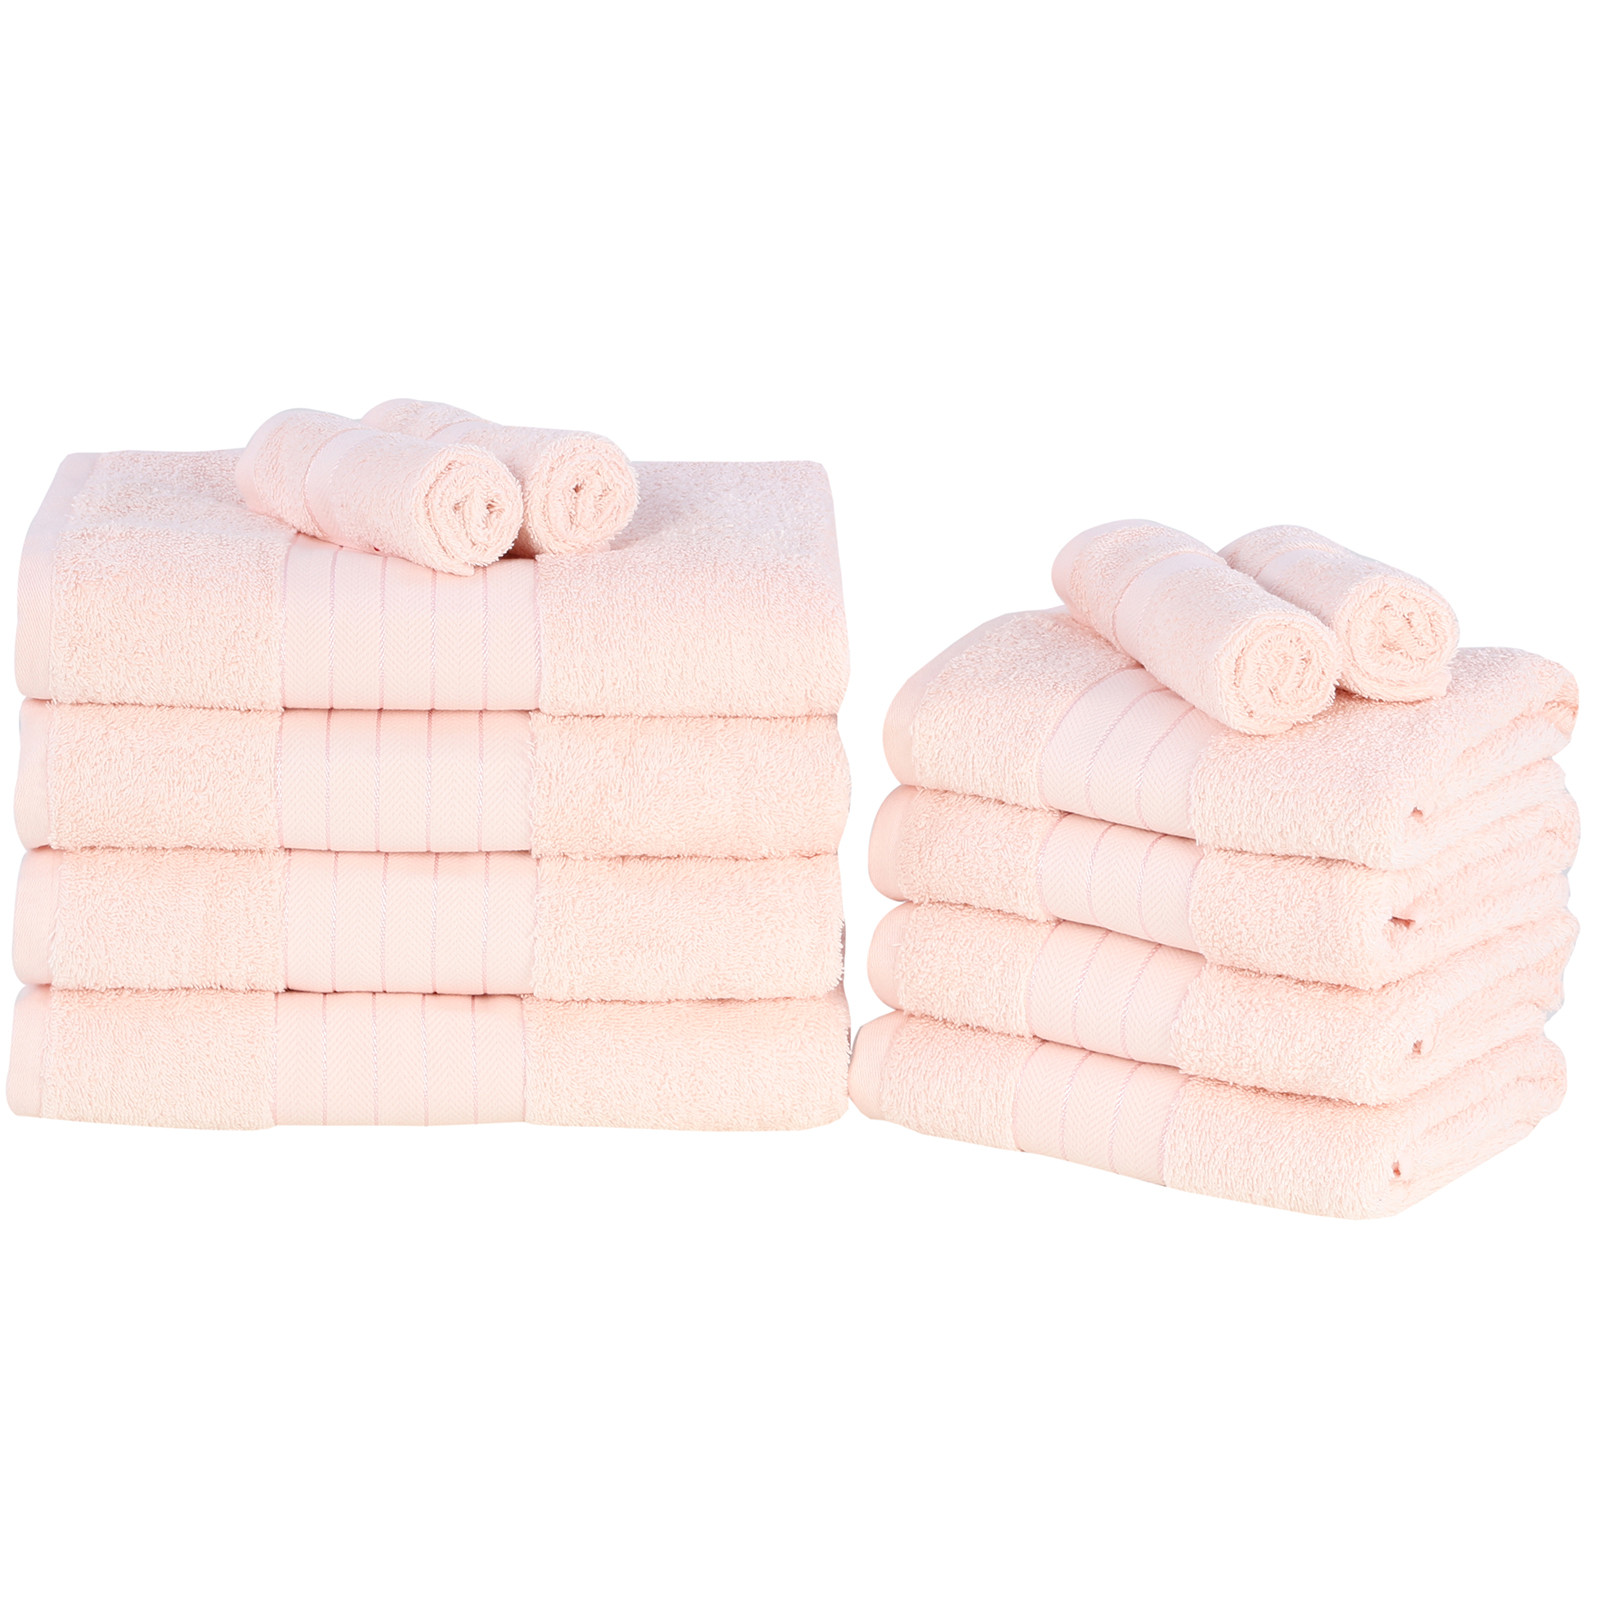 Light Pink Bathroom Towels
 Luxury Towels Bale Set Egyptian Cotton Soft Bath Hand